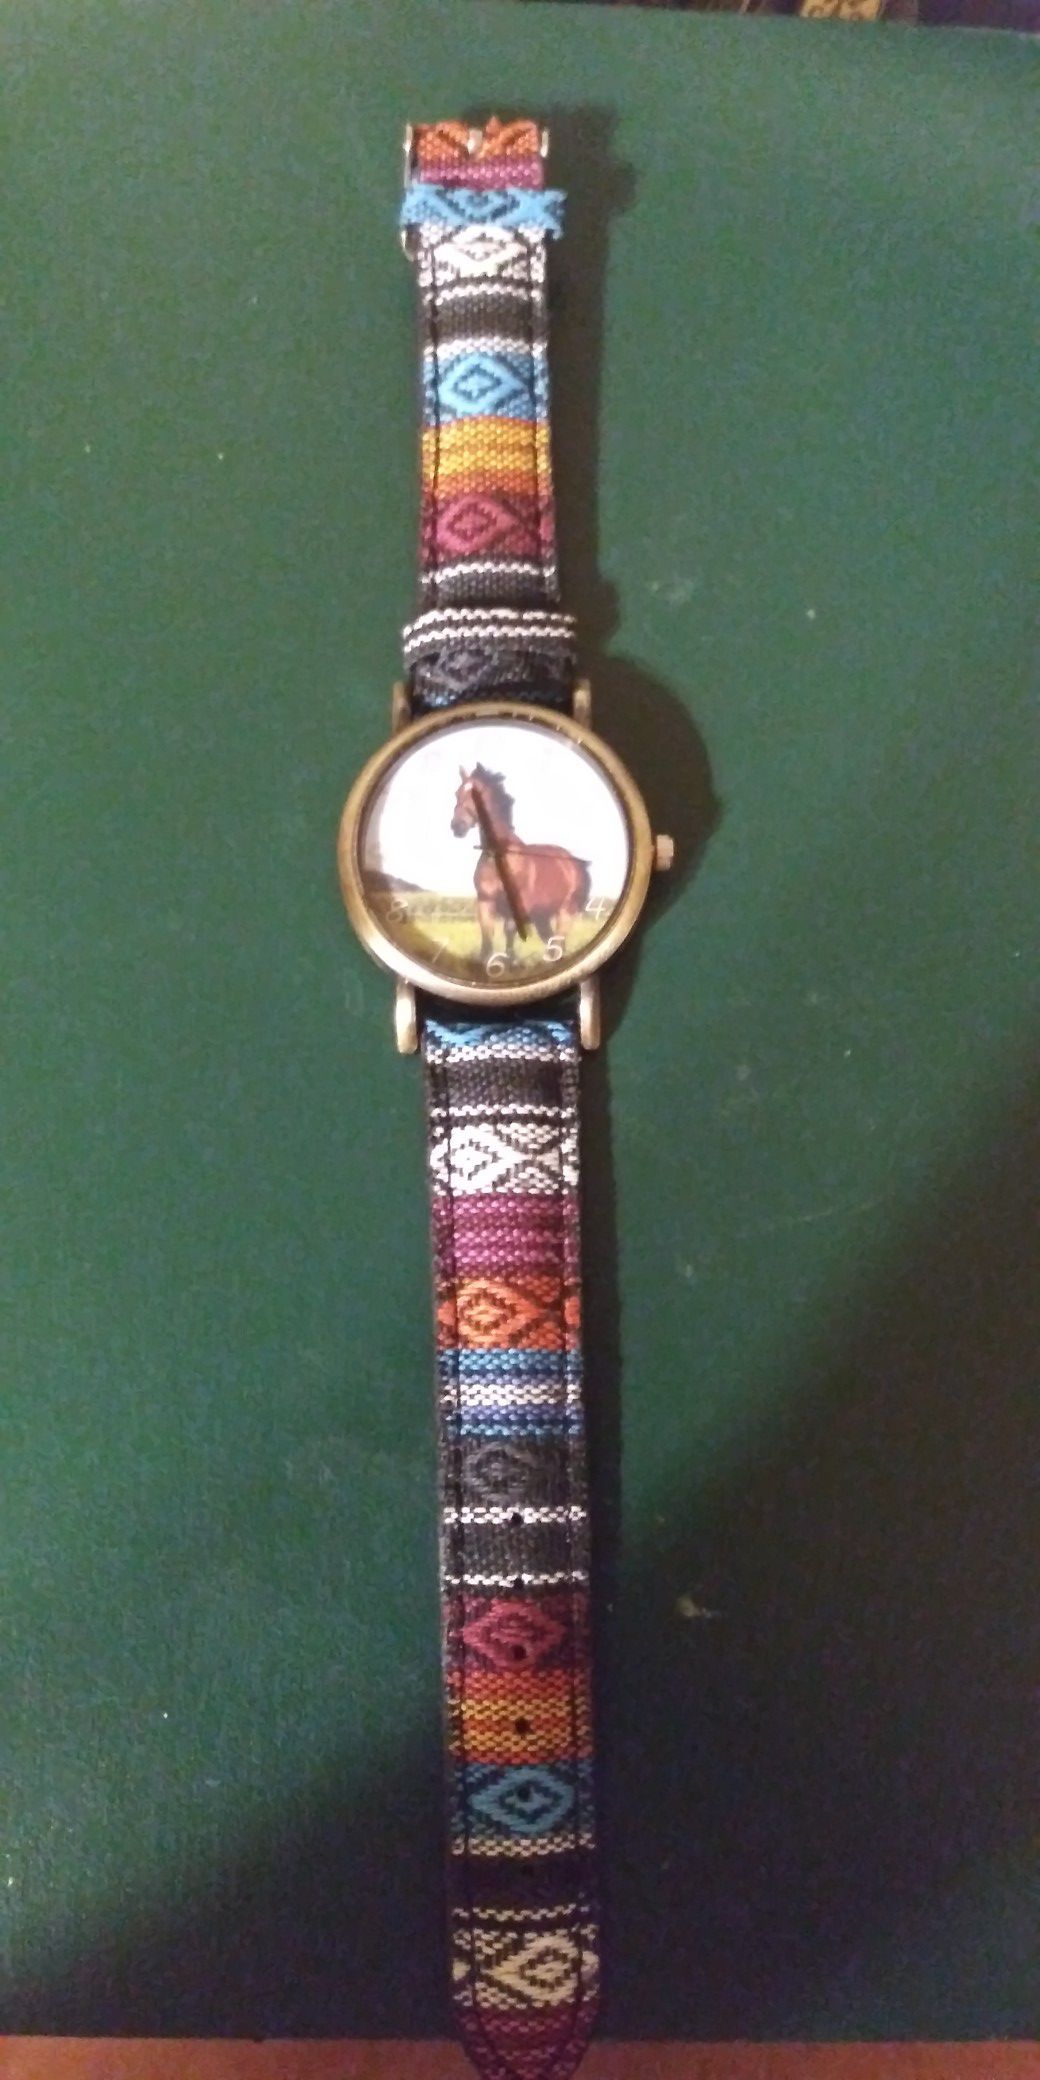 New! Horse watch